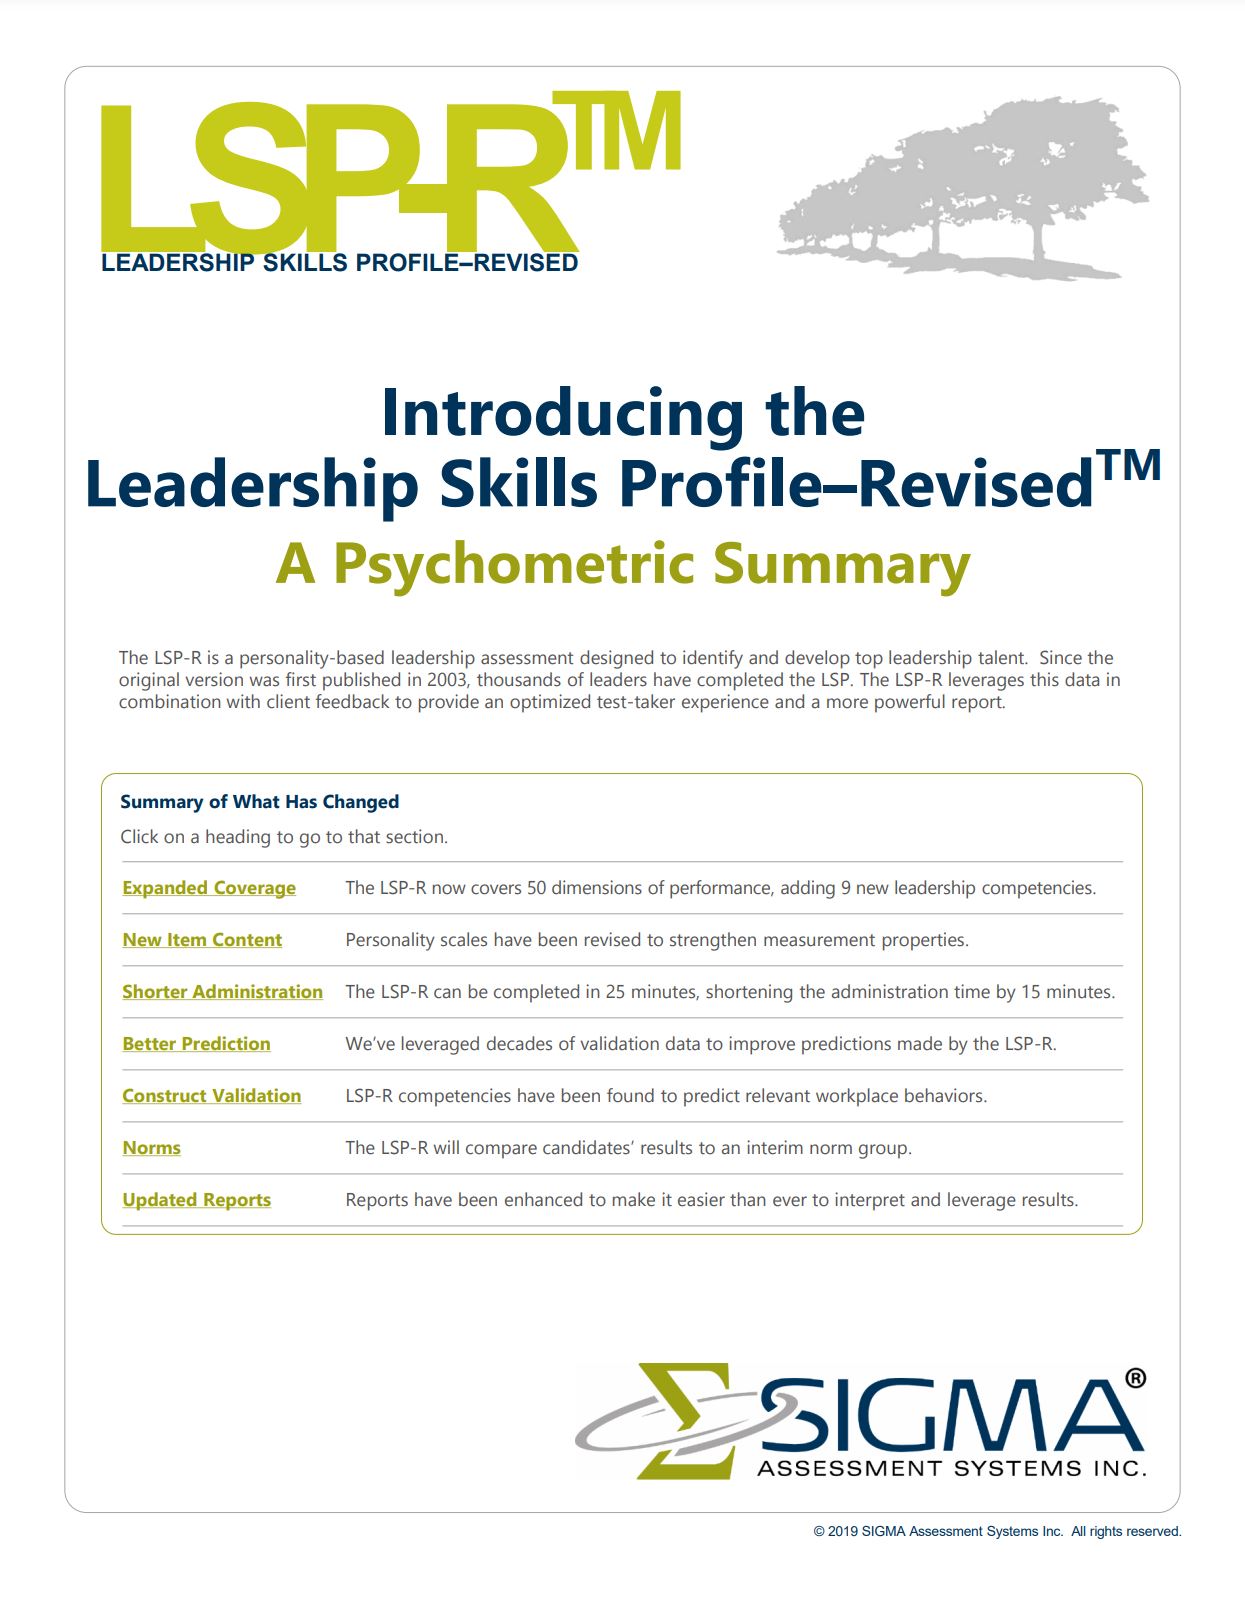 The LSP-R Psychometric Summary